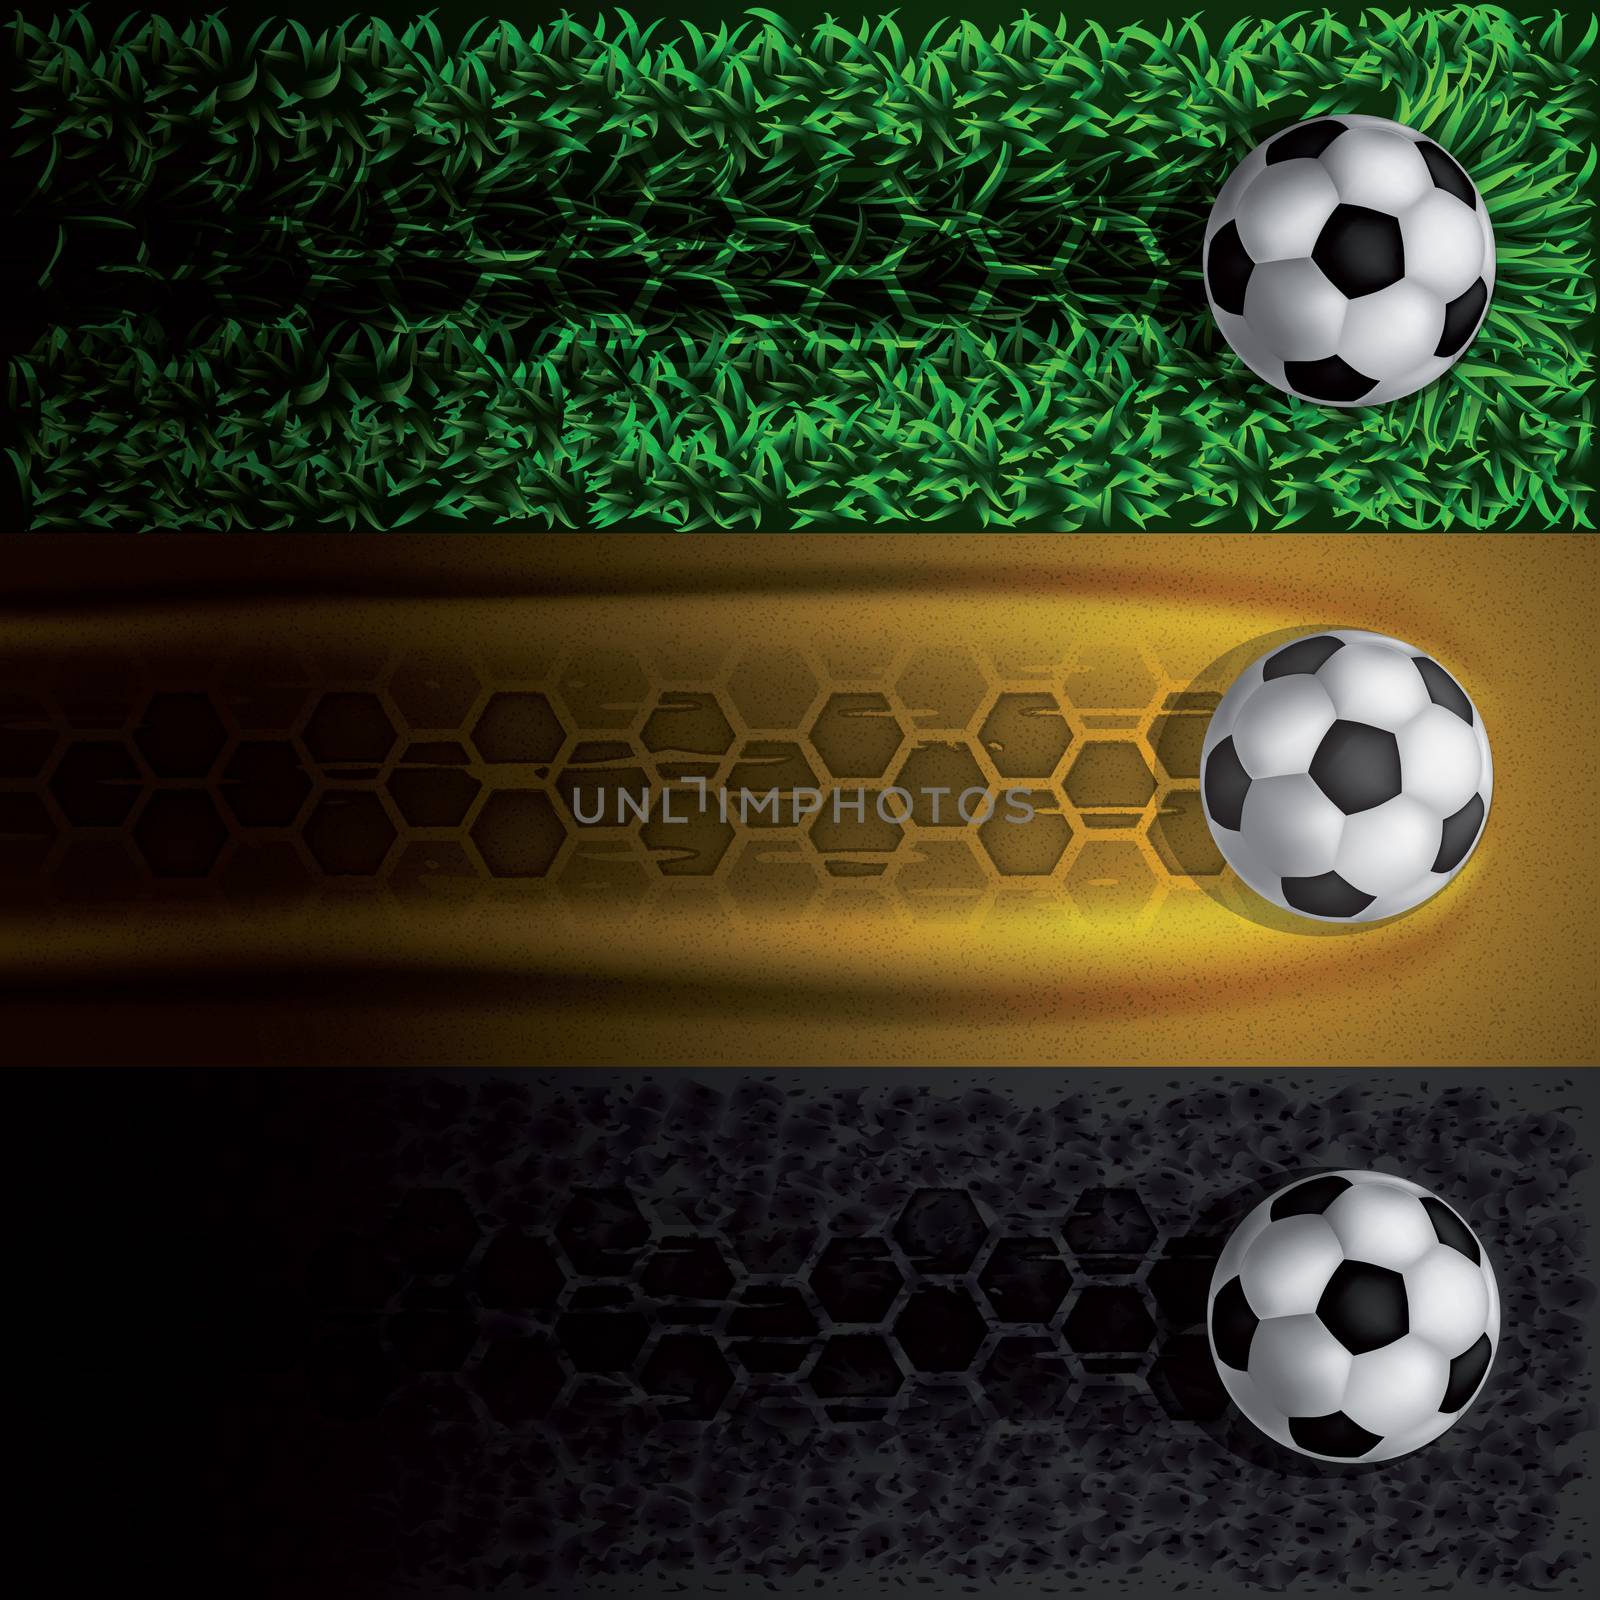 Track the soccer ball by TimLari